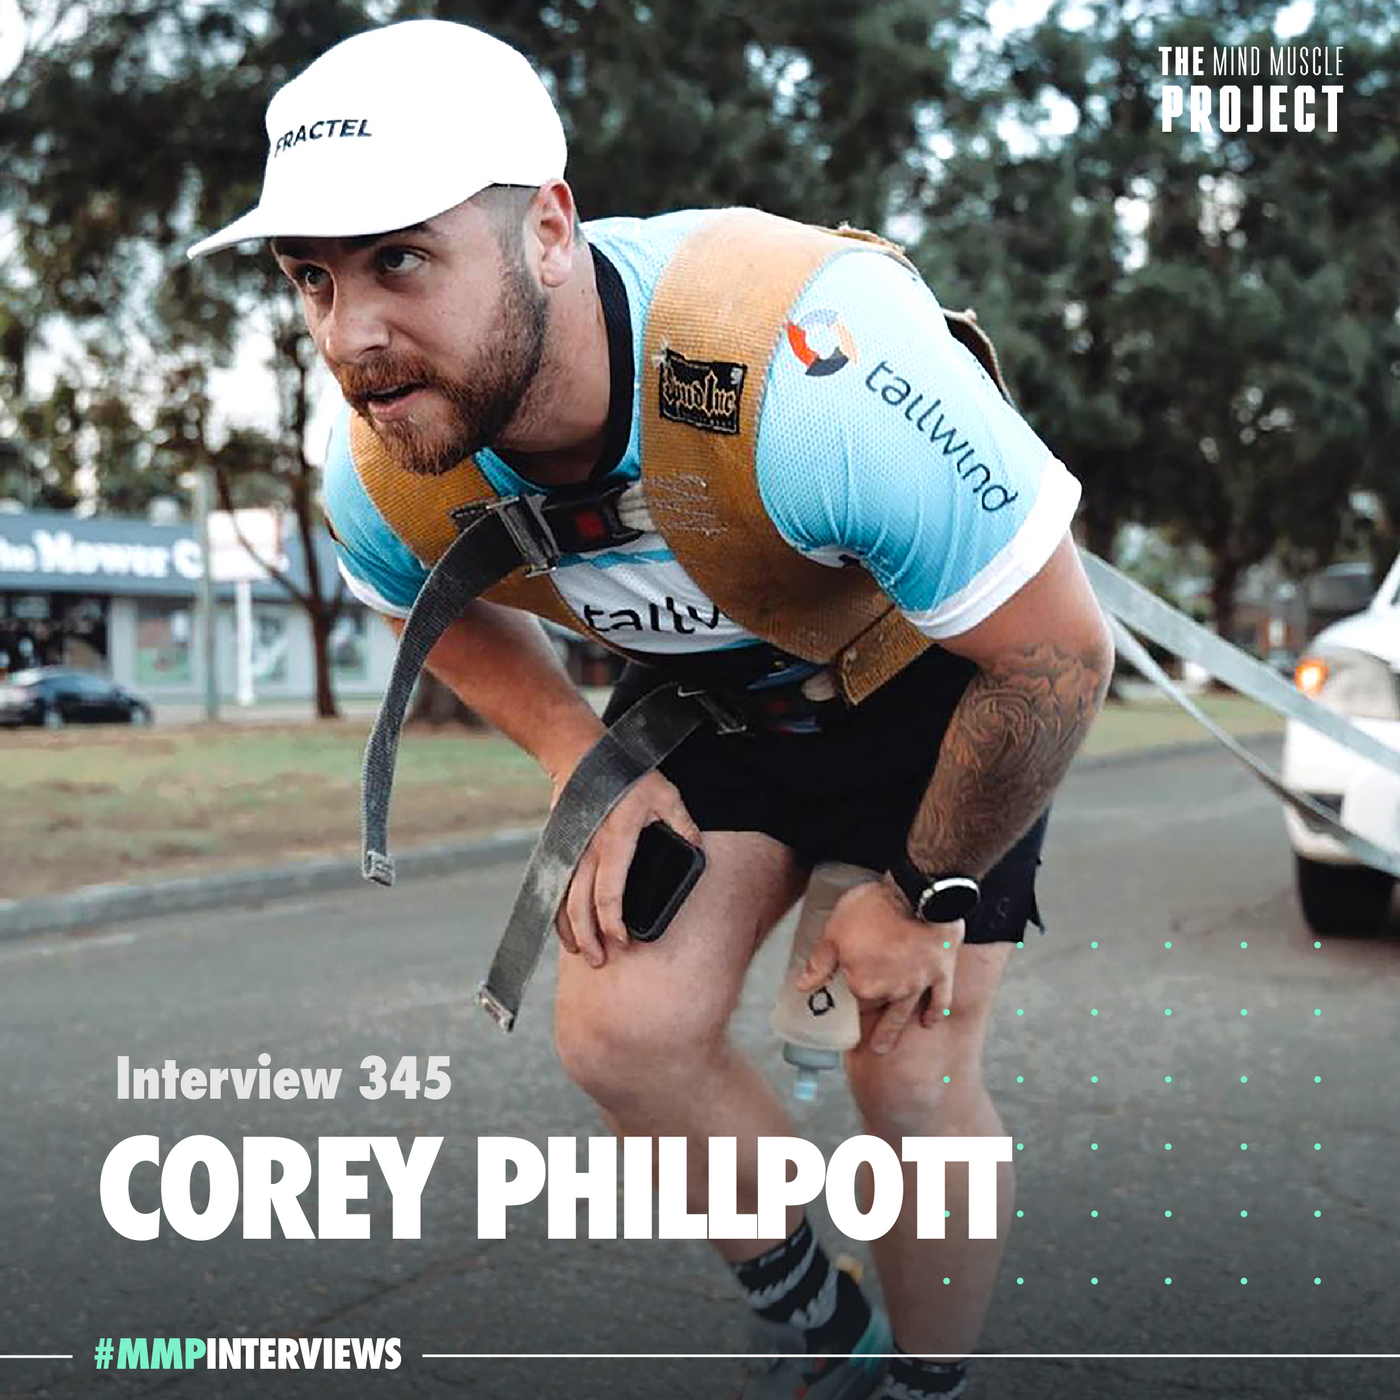 862: Corey Phillpott On Breaking The Worlds Strongest Marathon Record - Interview 345